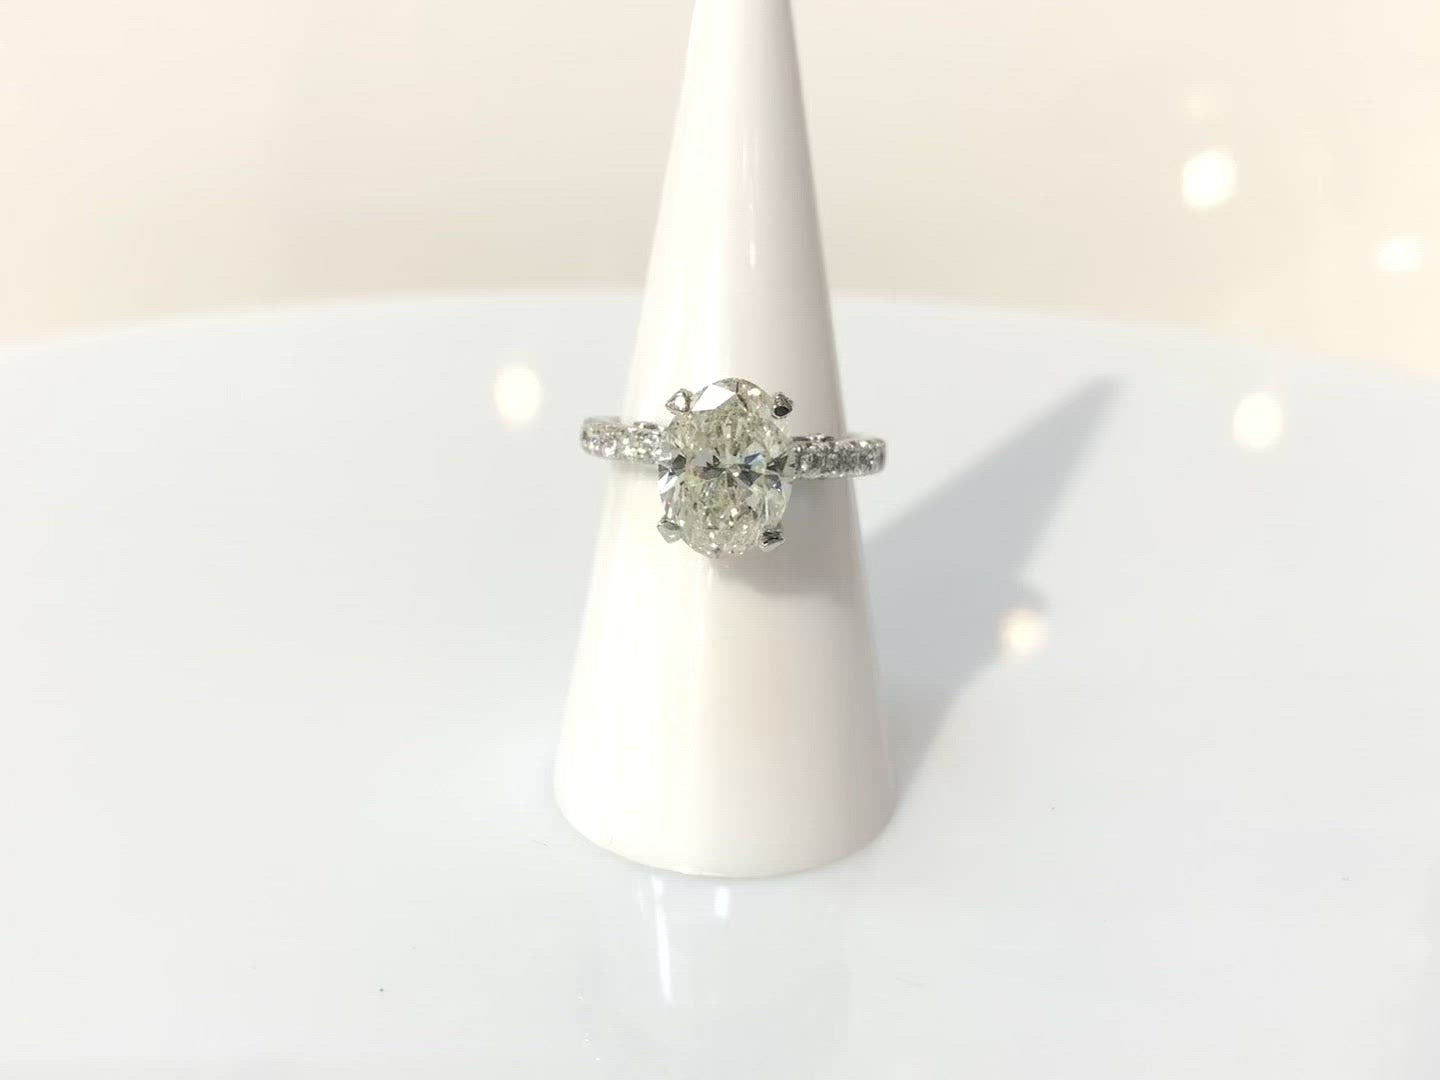 A three carat oval brilliant cut diamond wedding ring.